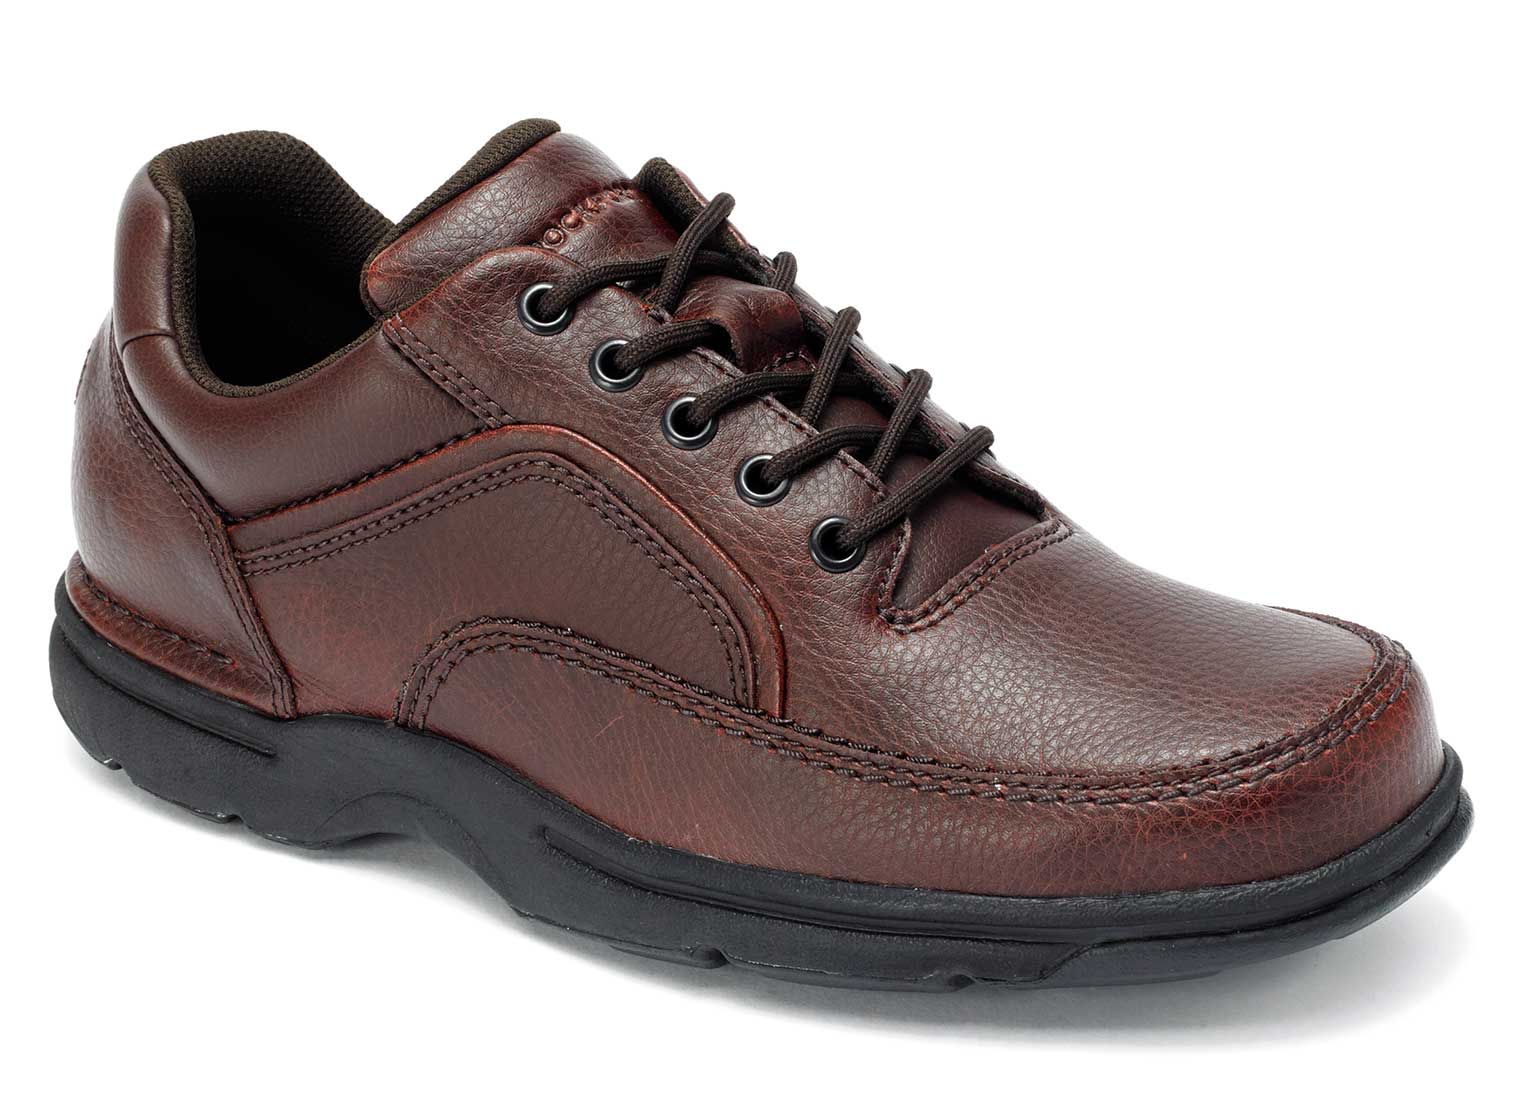 Rockport Ridgefield Eureka K71201 Men's Brown - Casual Shoe - Extra ...